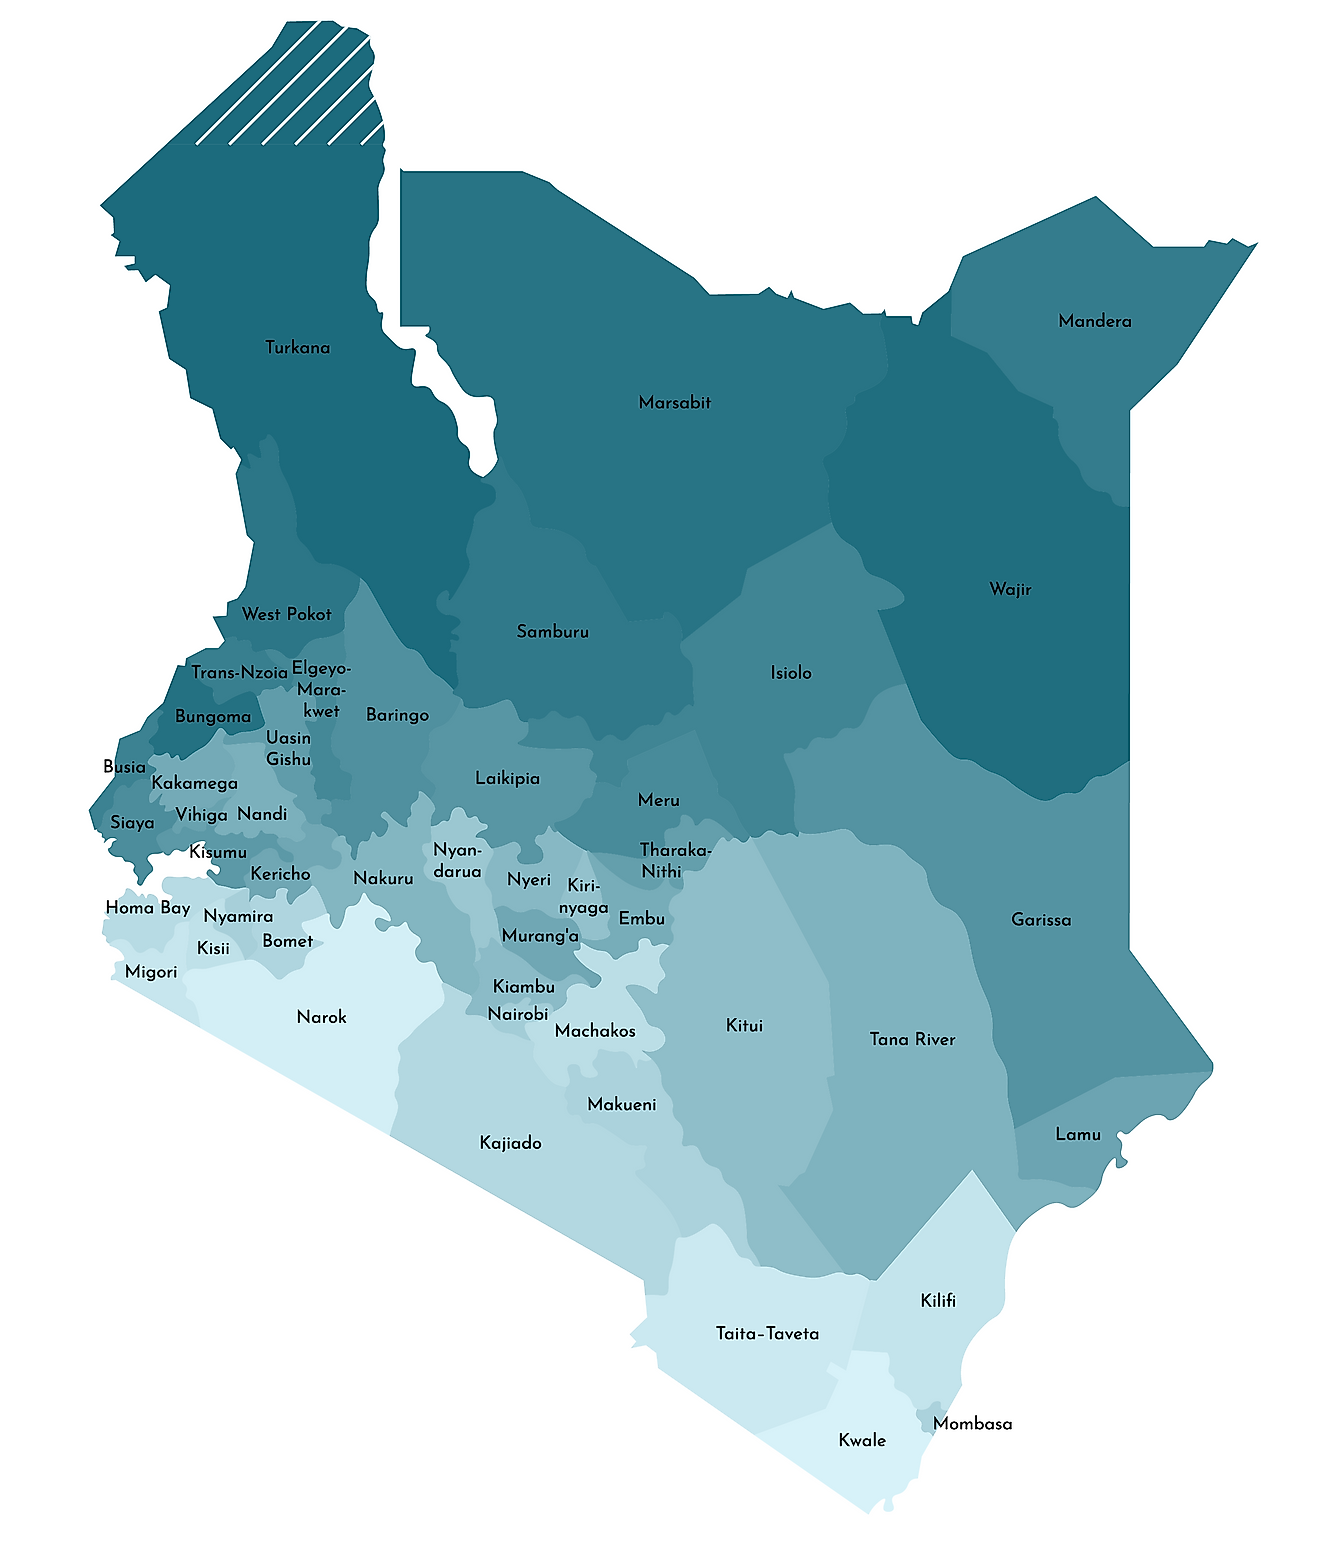 Political Map of Kenya displaying 47 counties including the national capital of Nairobi.